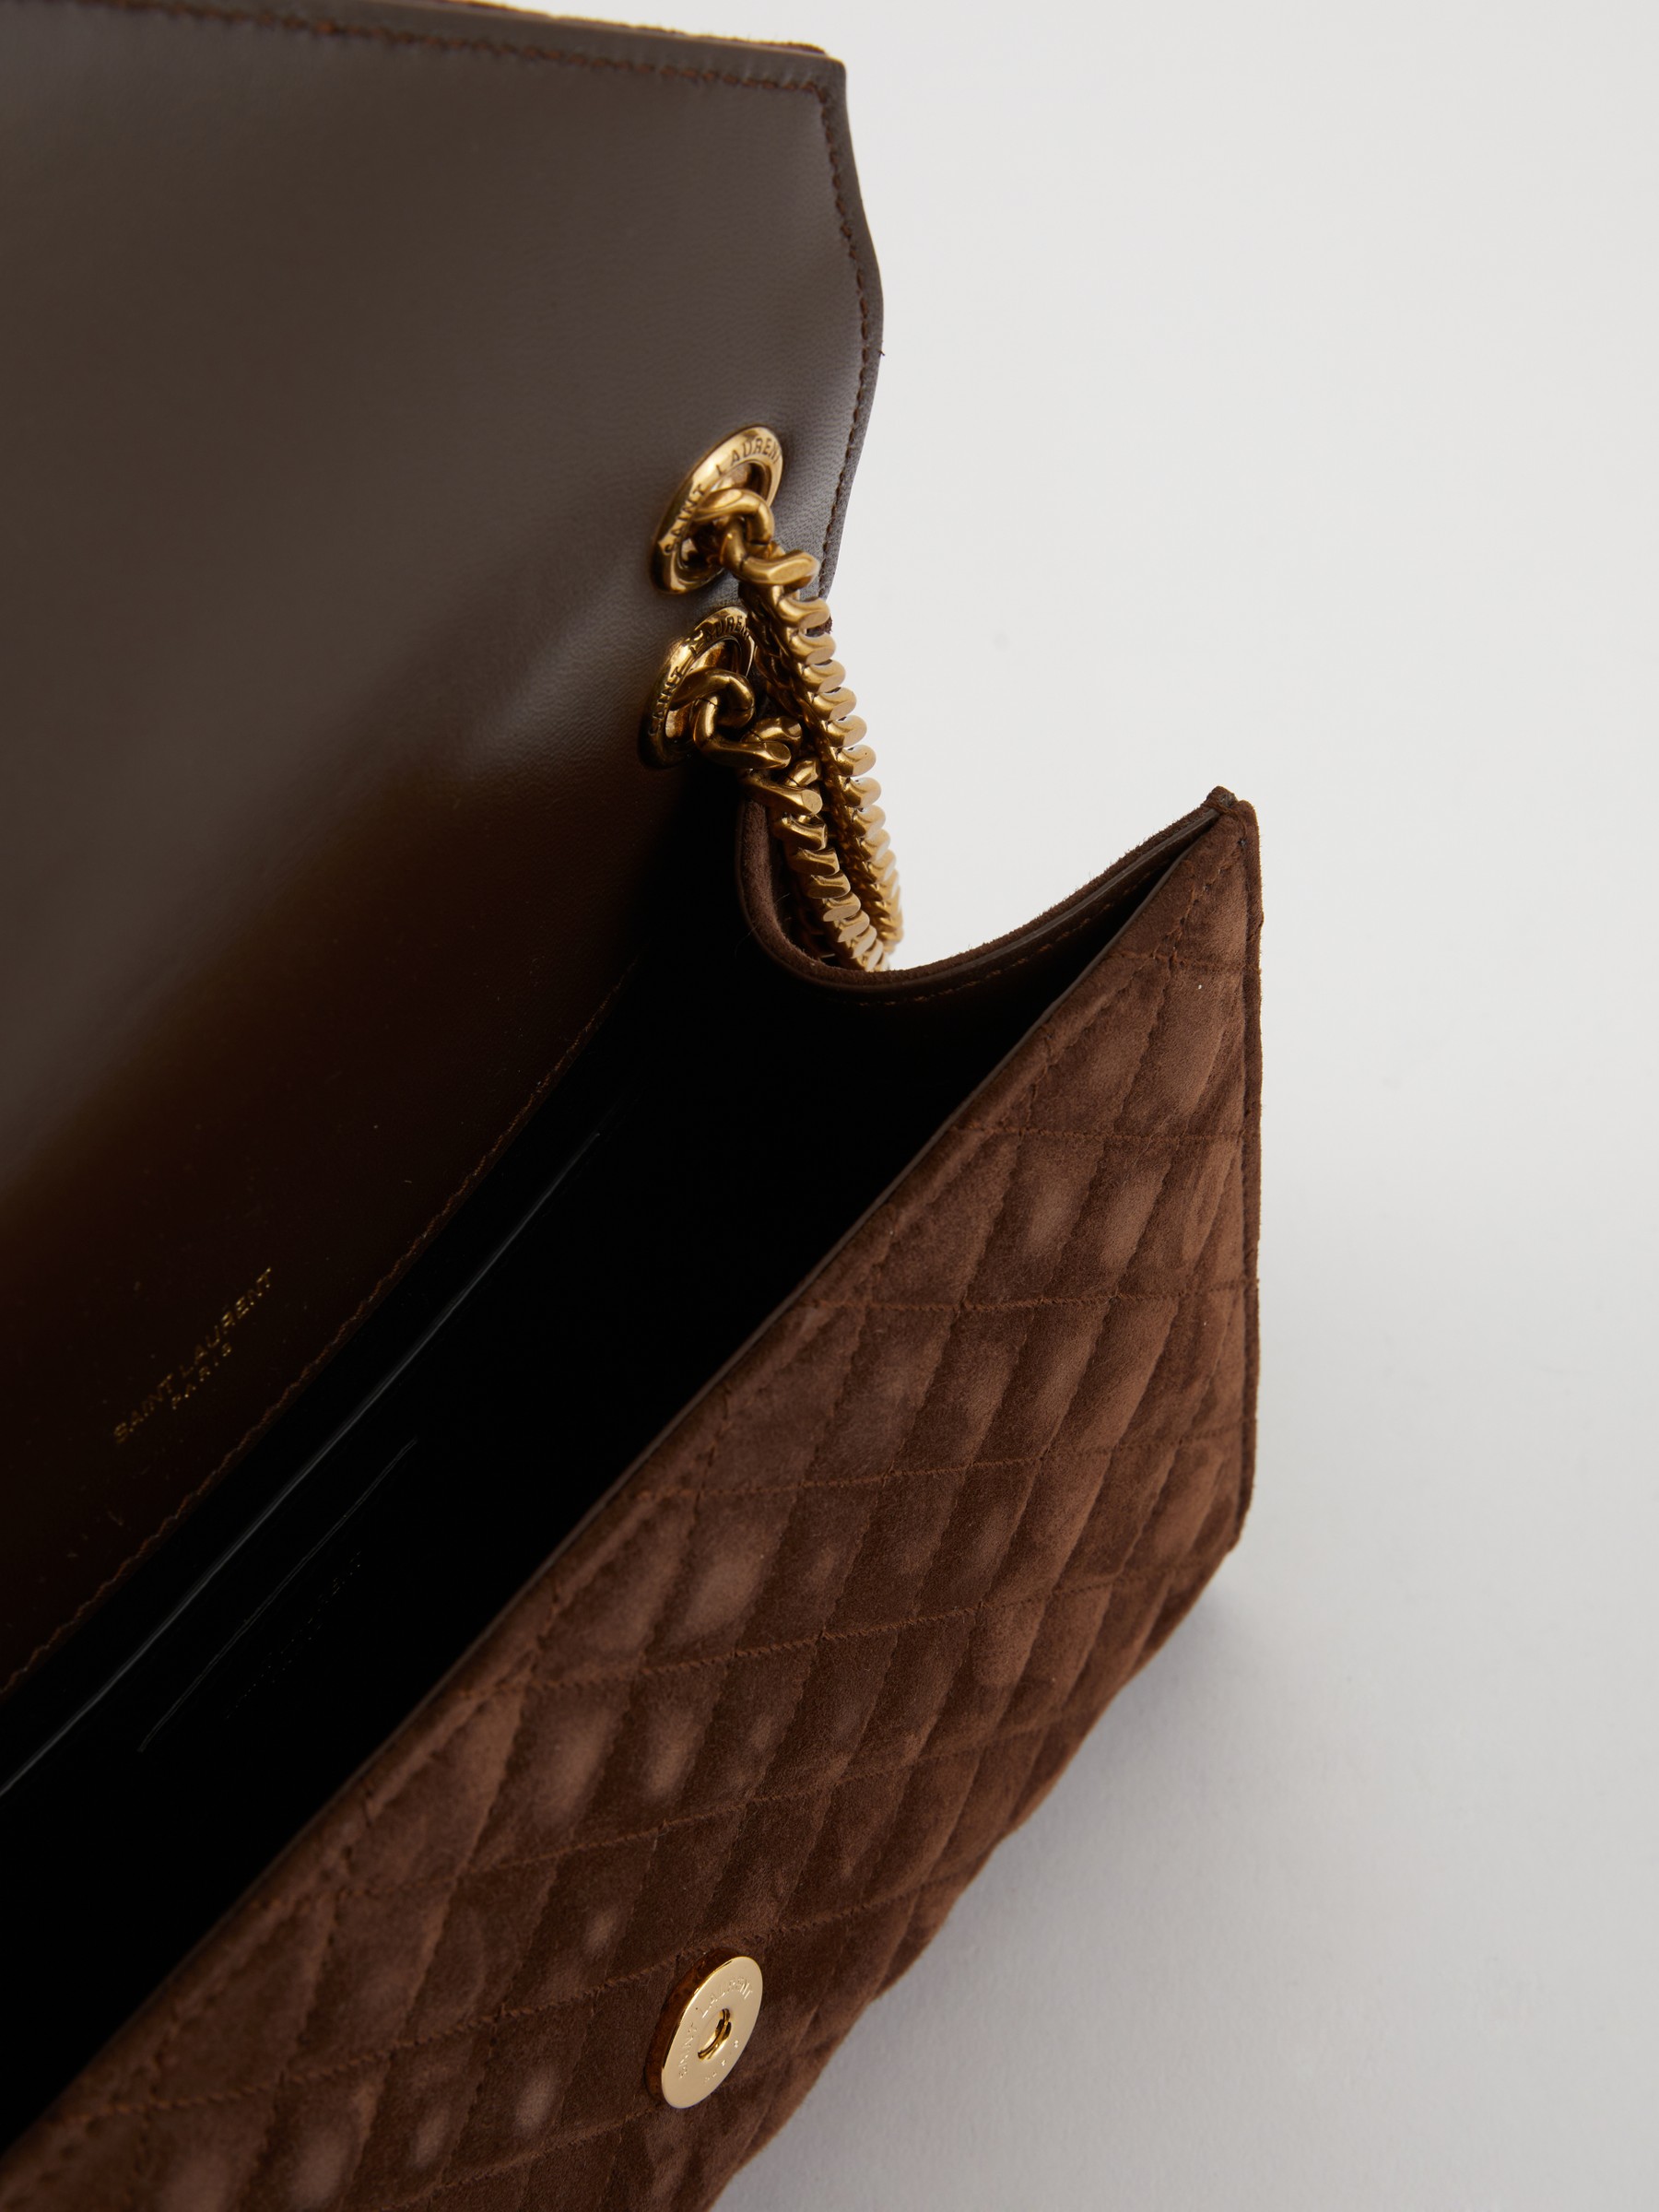 Brown 'Envelope Medium' shoulder bag Saint Laurent - Vitkac Germany